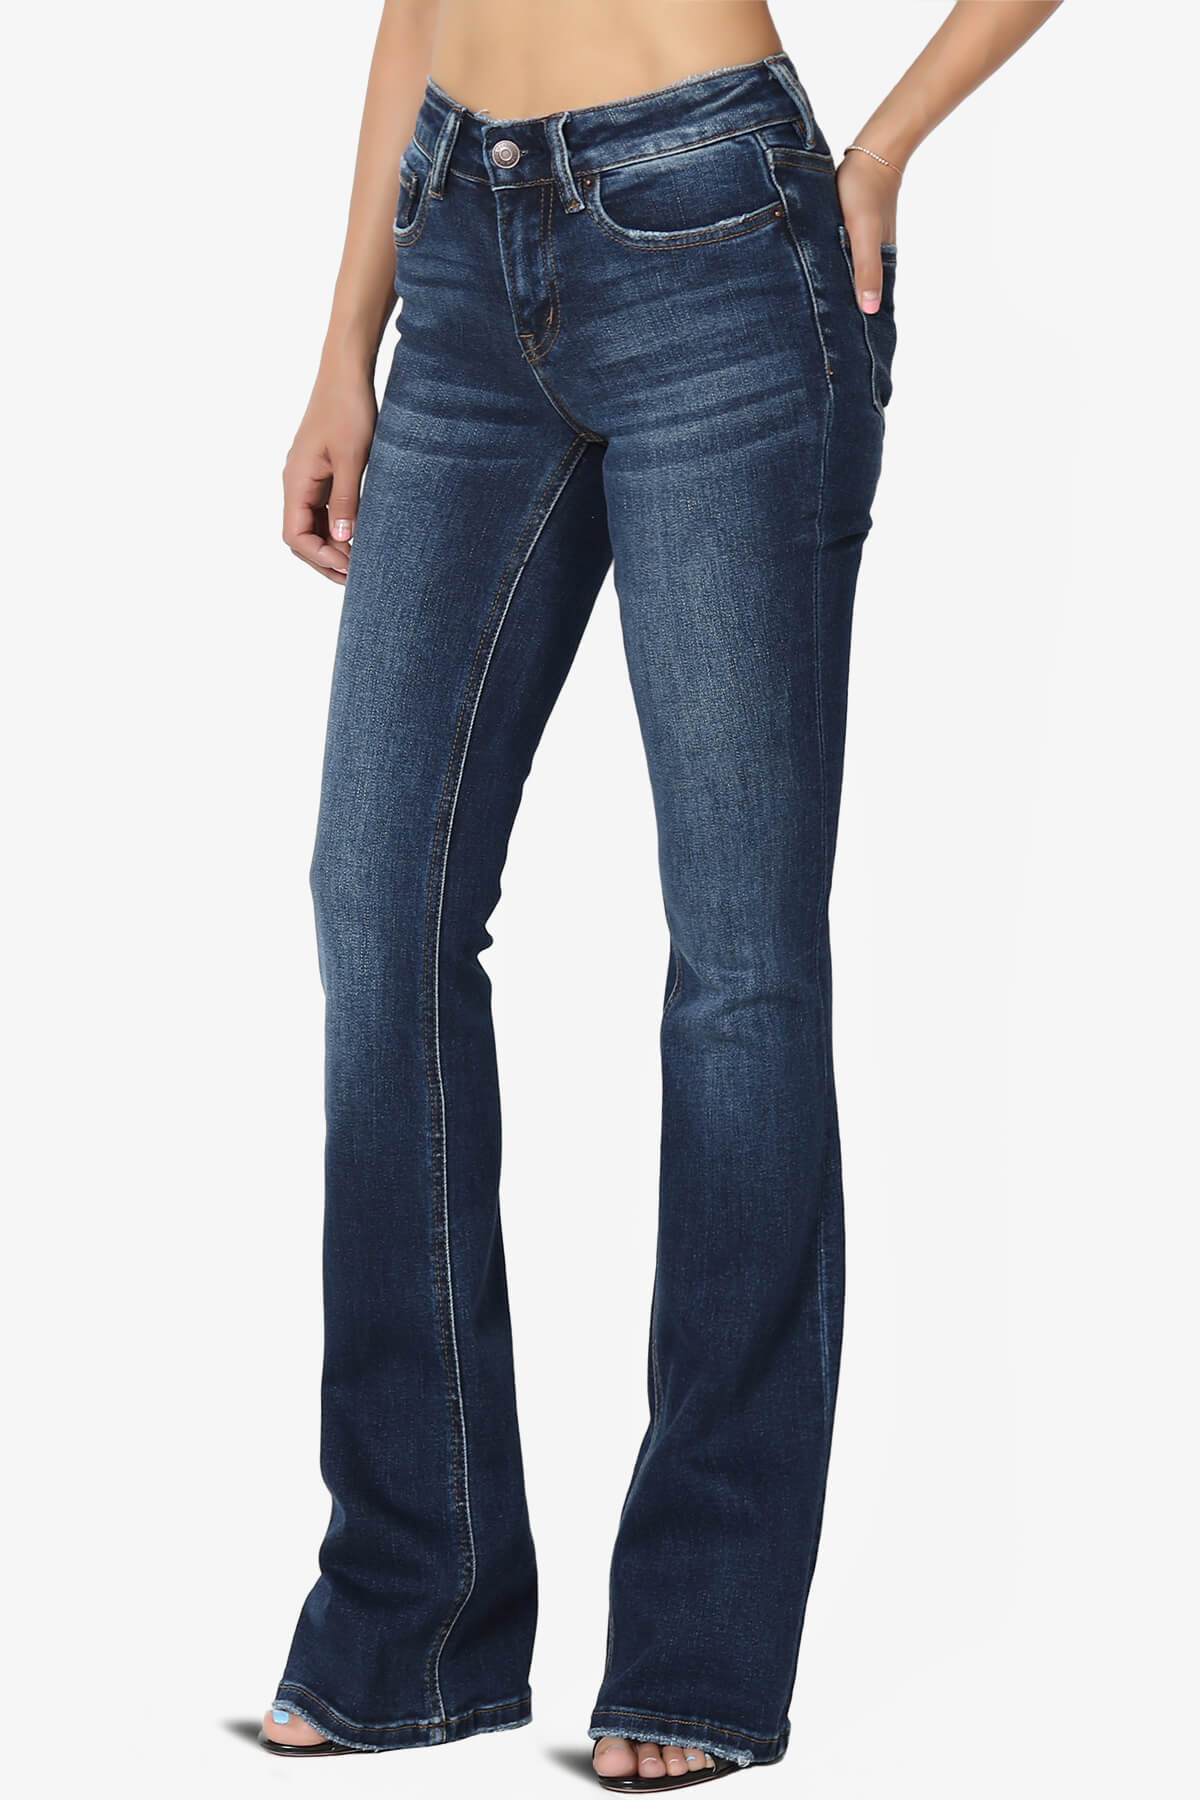 TheMogan Women's Vintage Versatile Washed Stretch Denim Mid Rise Slim Boot Cut Jeans